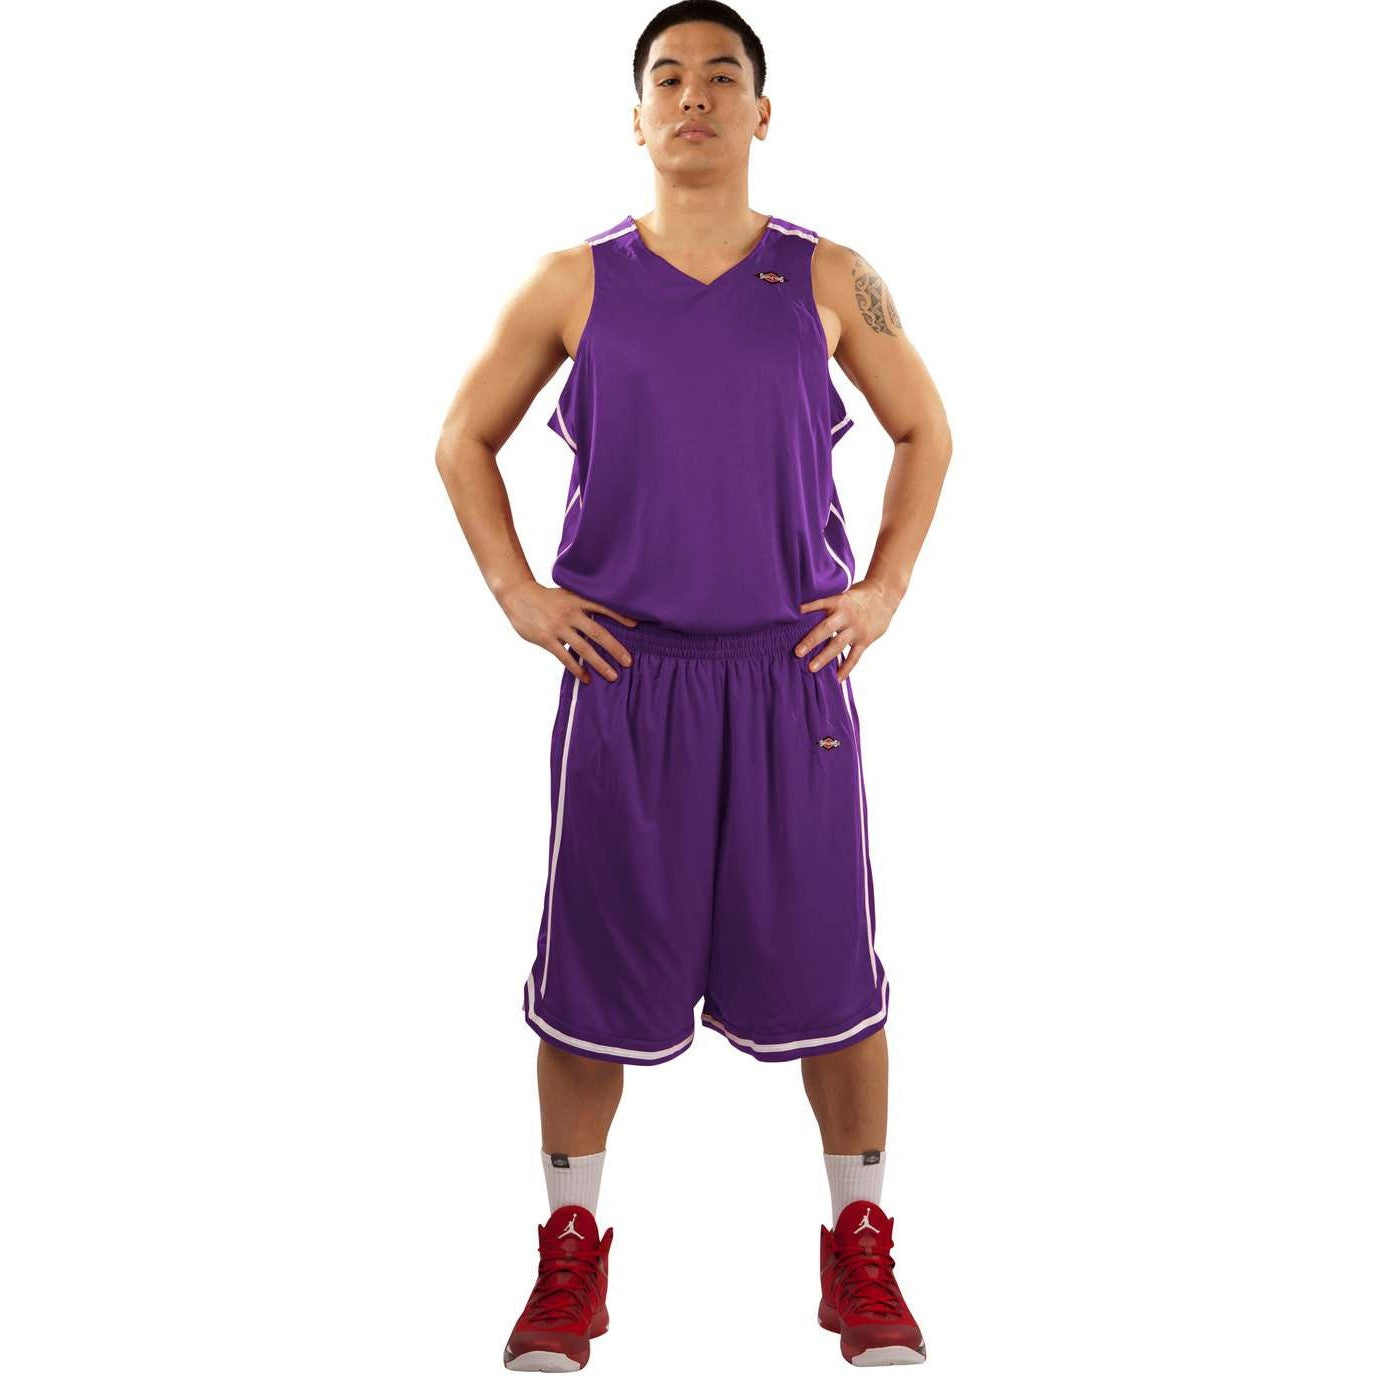 Shirts & Skins PUrple/White League Reversible Basketball Uniform